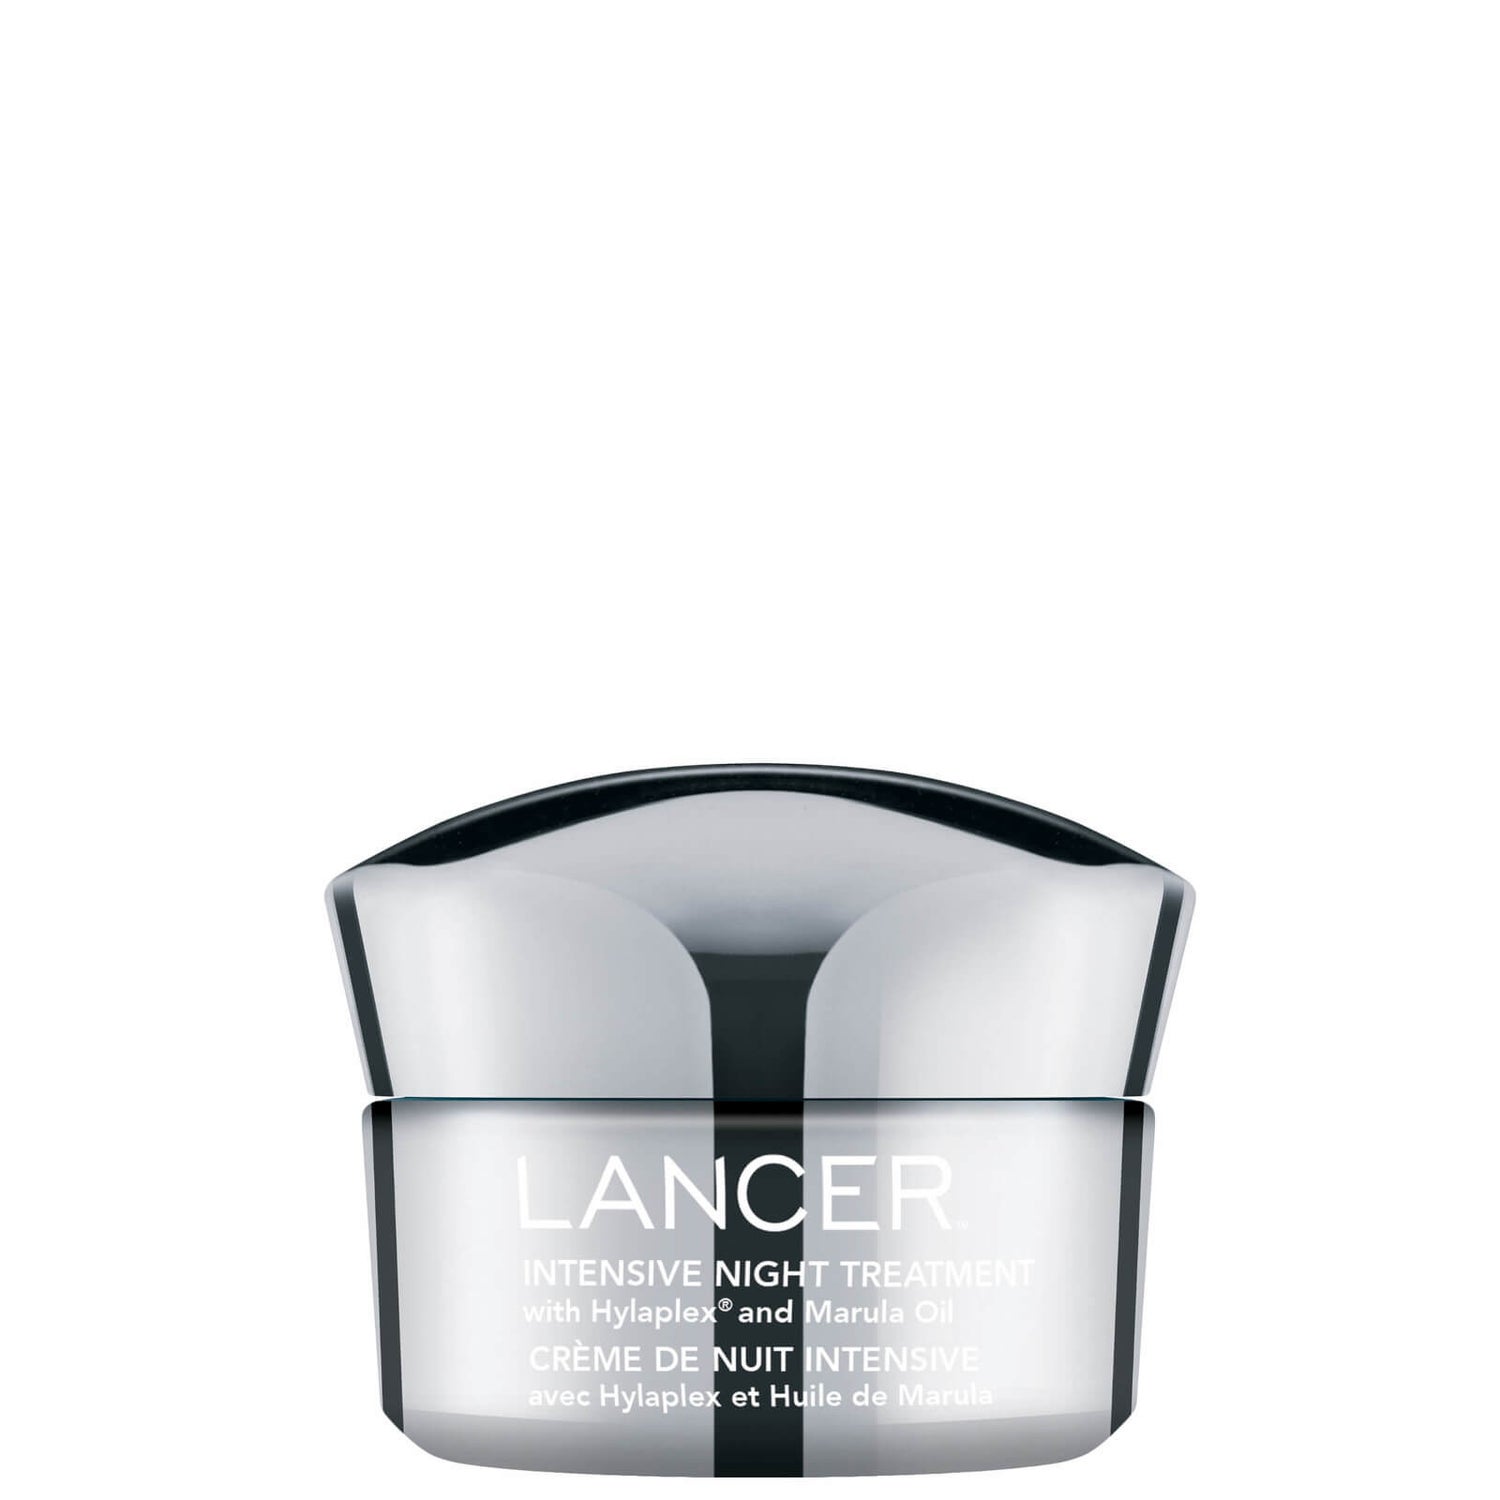 Lancer Skincare Intensive Night Treatment with Hylaplex and Marula Oil (1.7 fl. oz.)